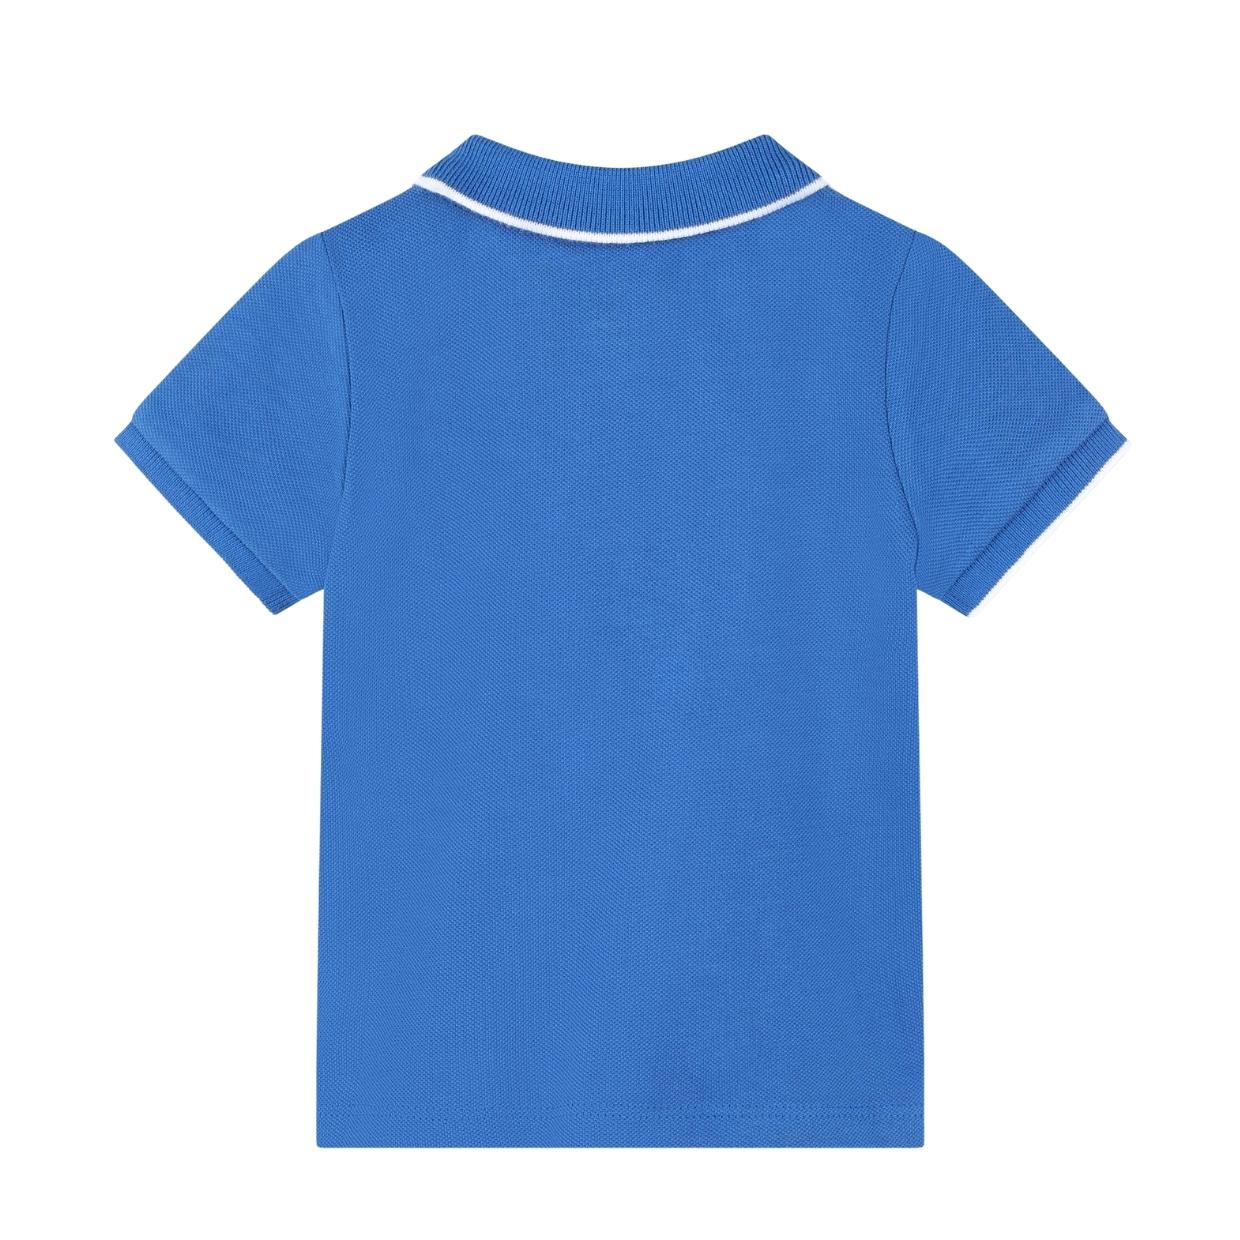 BOSS Baby Print Logo Short Sleeve Royal Blue Polo Shirt